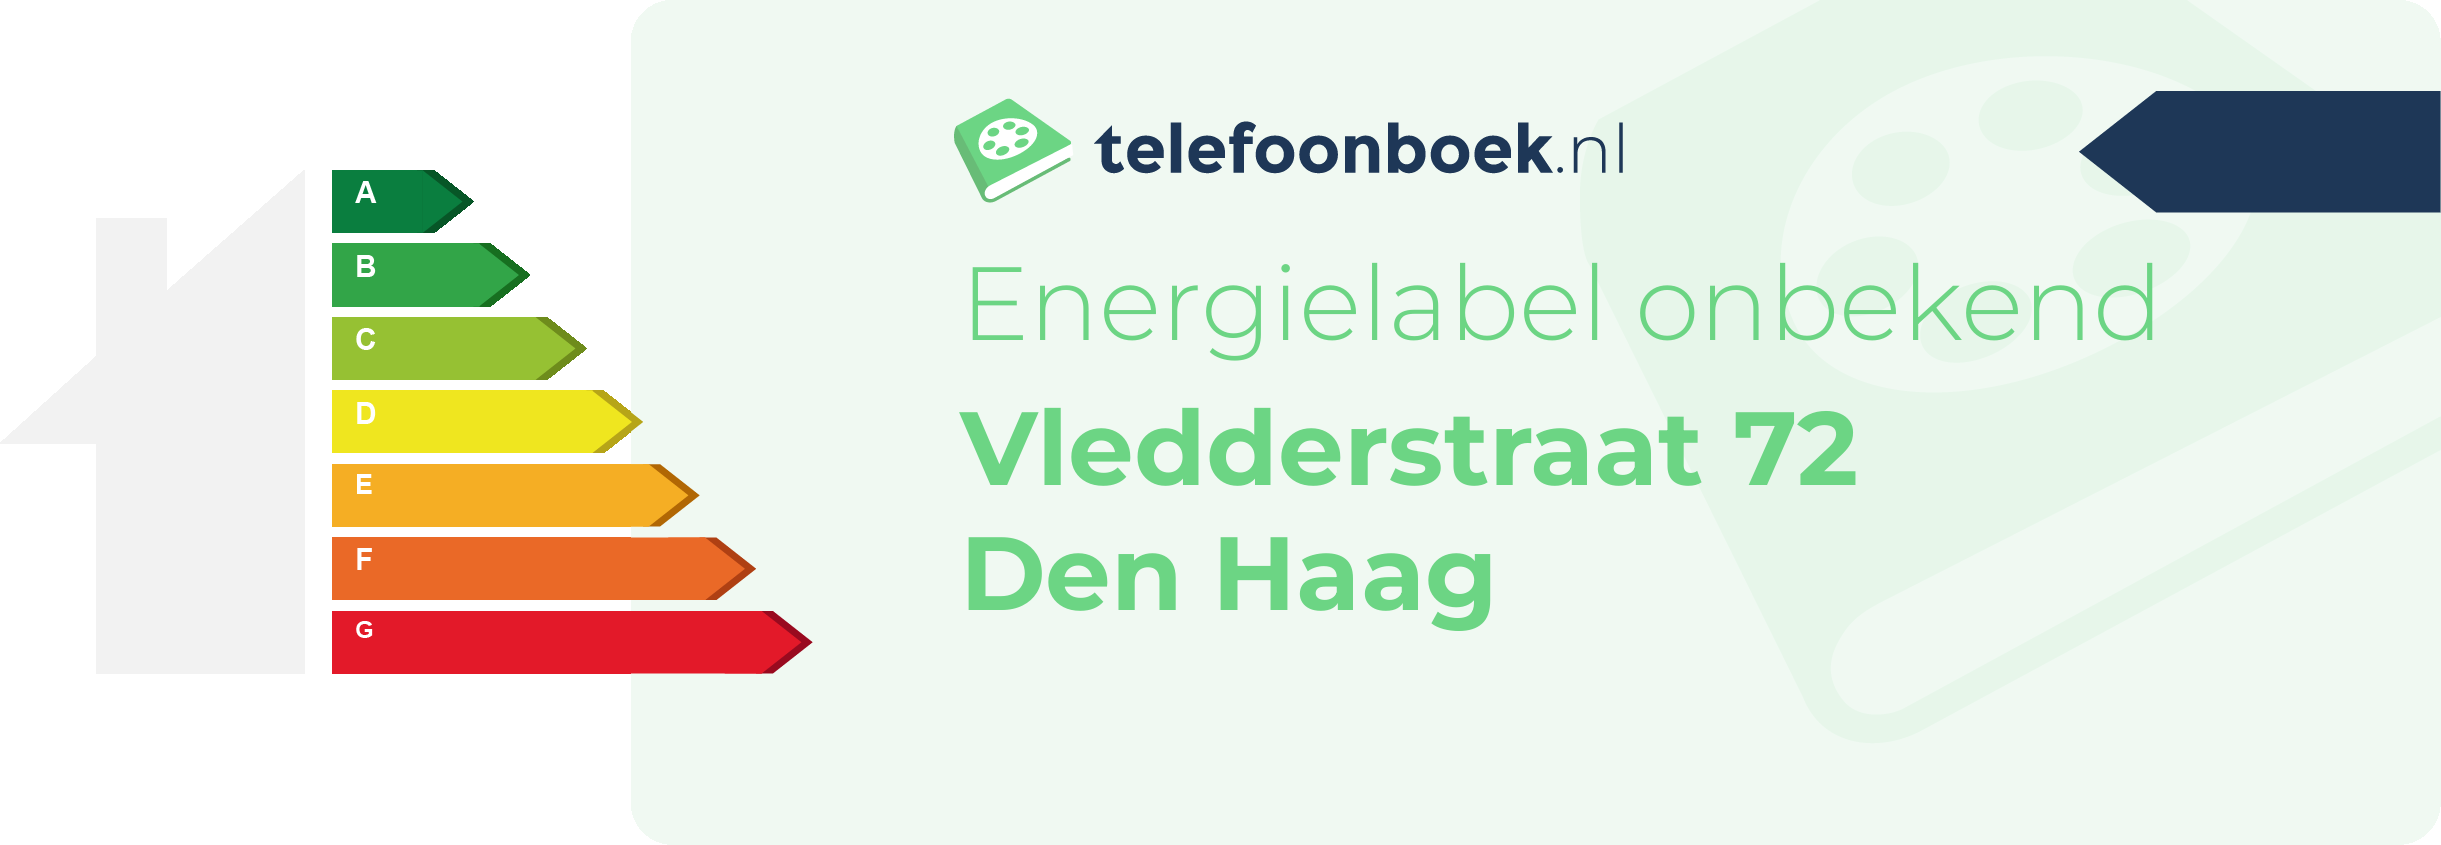 Energielabel Vledderstraat 72 Den Haag